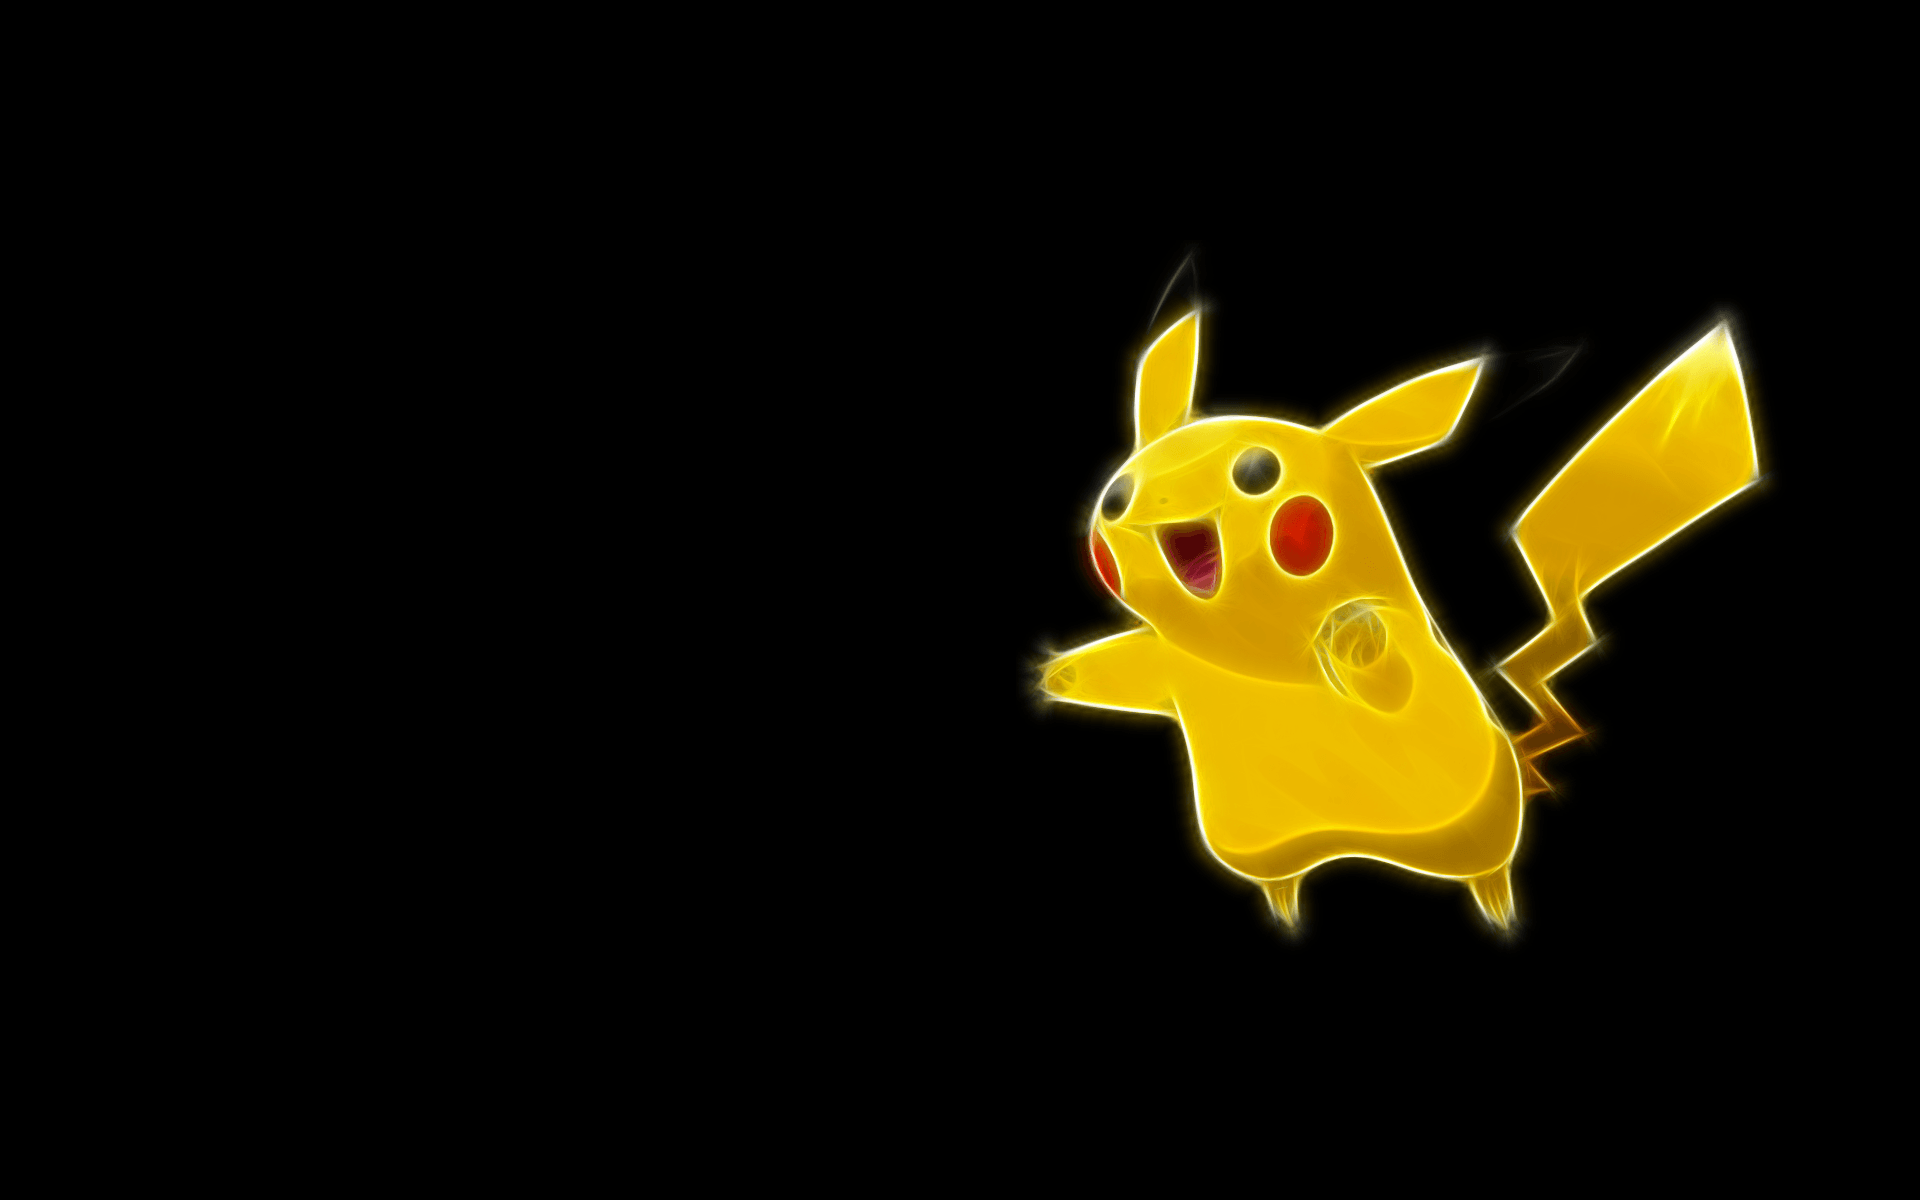 Pikachu - #Pokemon [Gaming • Movies Shows] #desktop #wallpaper